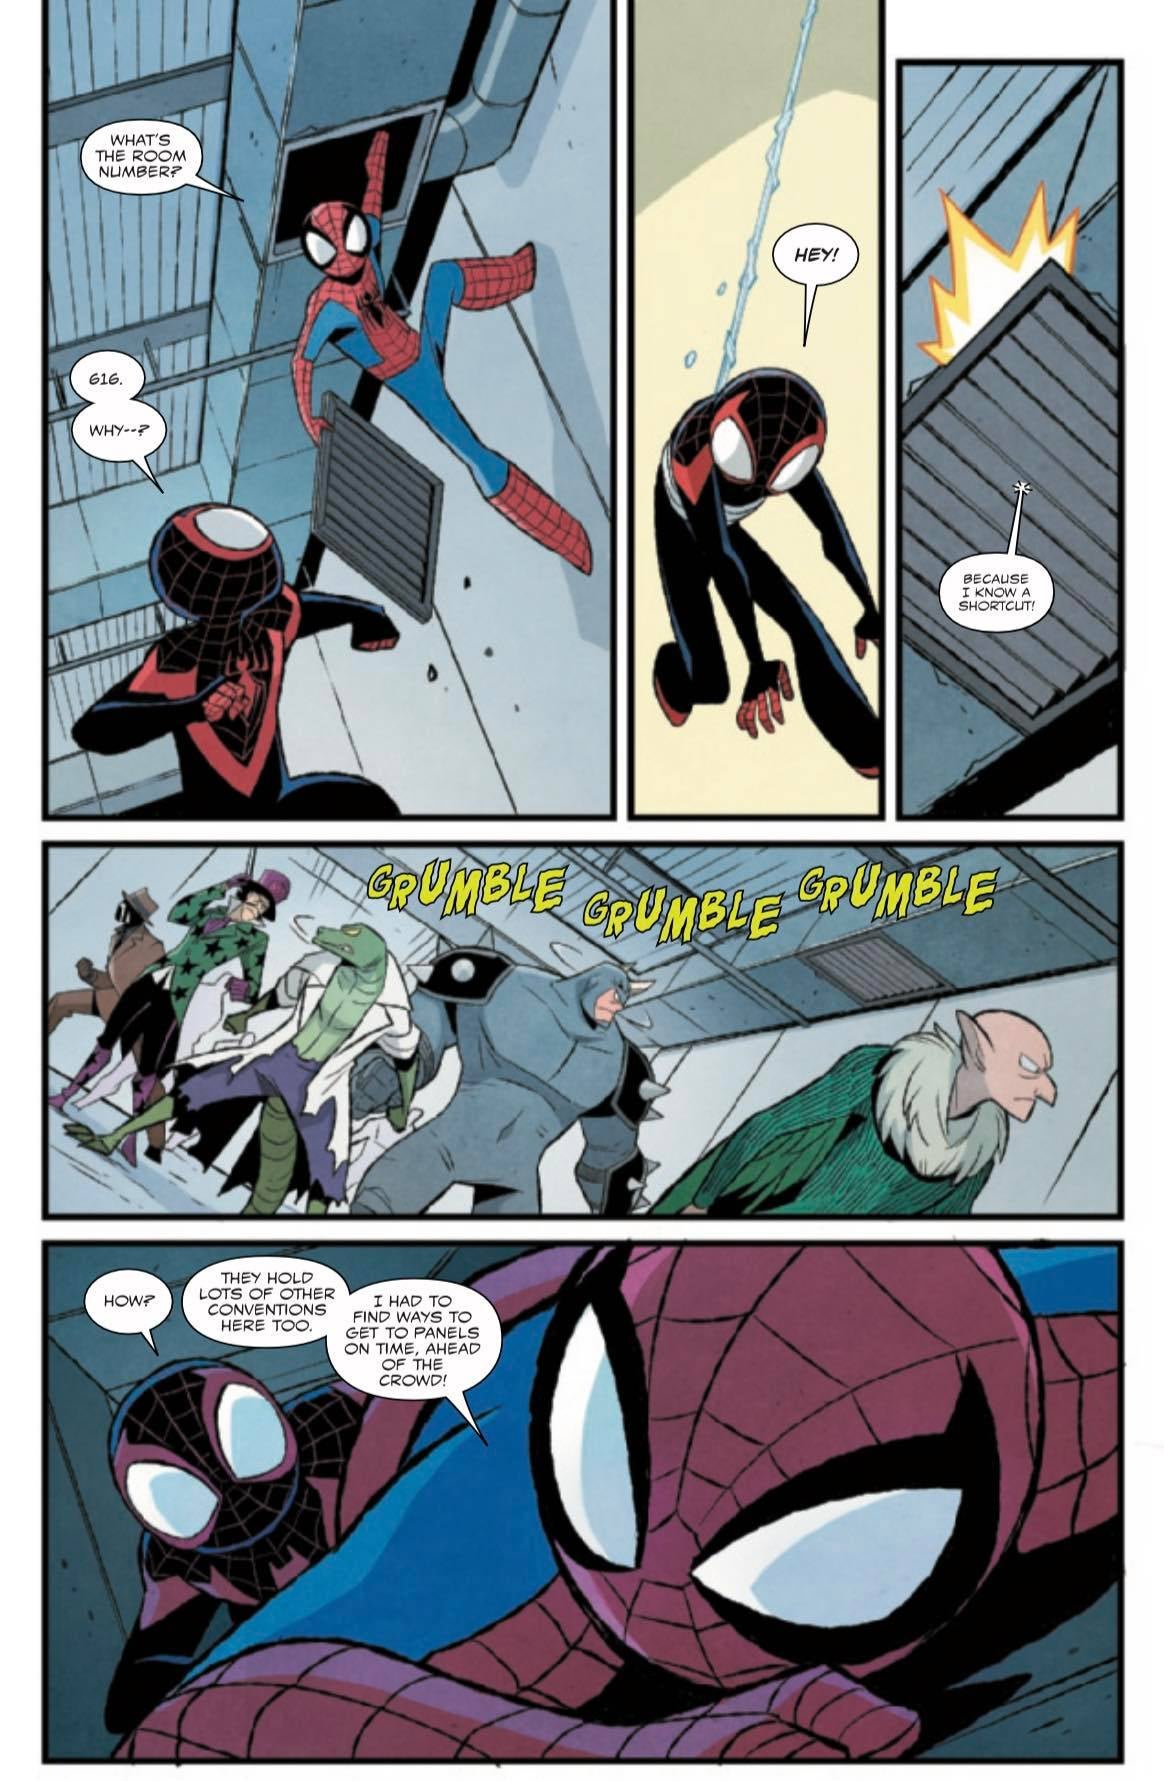 Spider-Man's unconventional convention hack